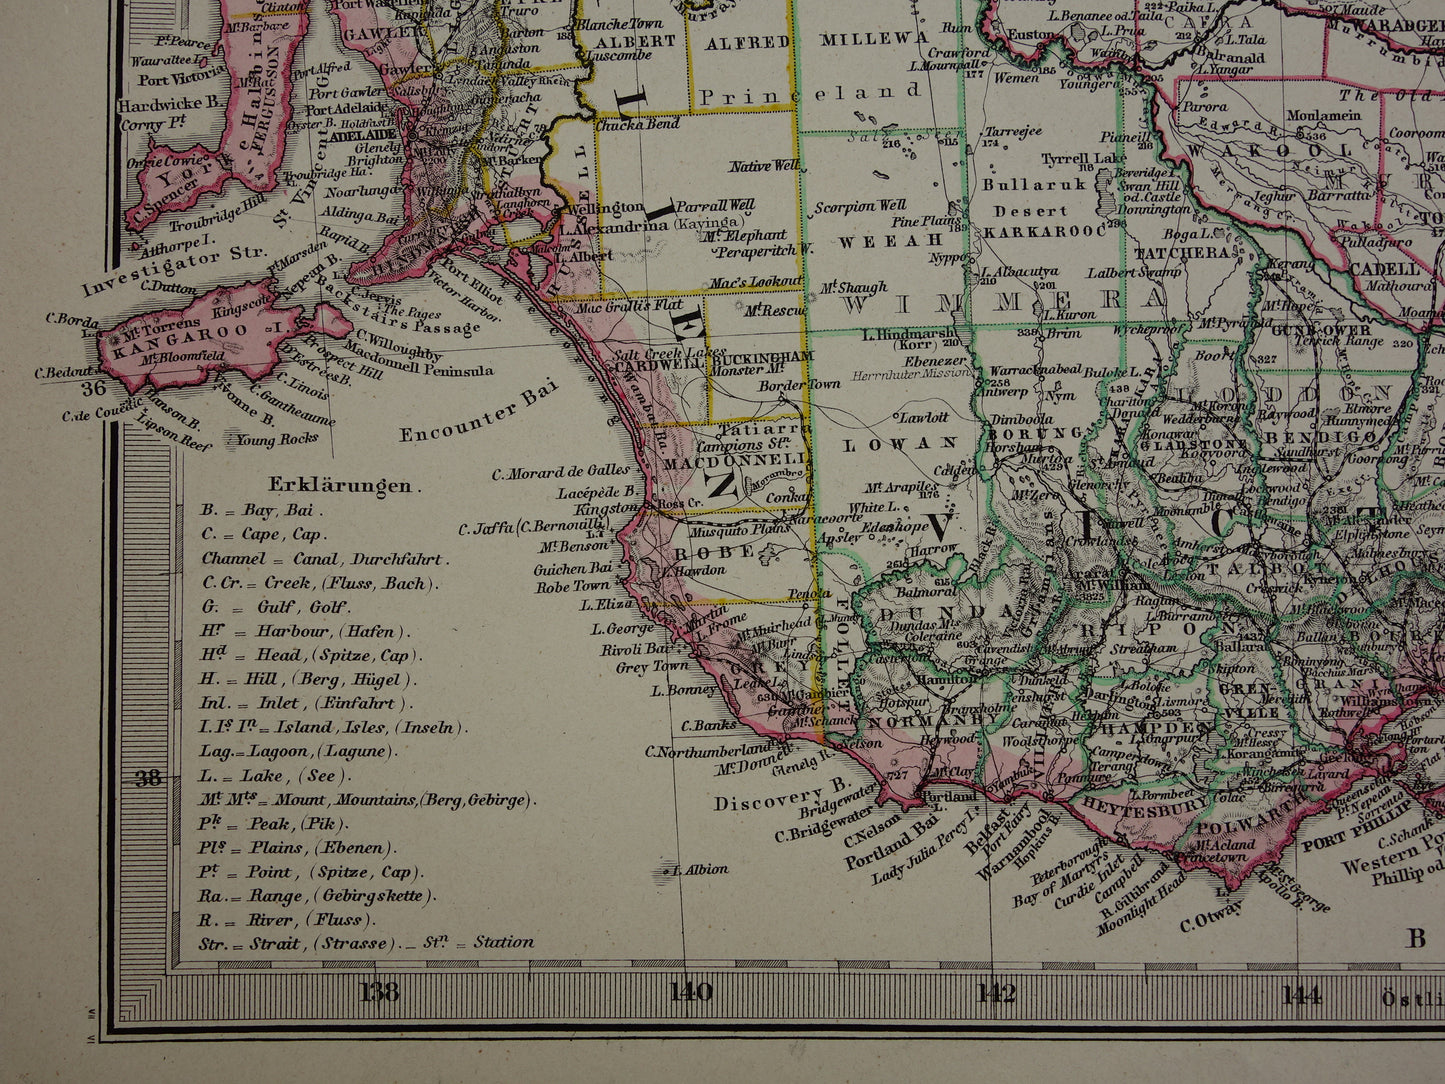 AUSTRALIE oude kaart van Zuid-Oost Australië 1886 originele antieke Duitse handgekleurde landkaart poster met jaartal